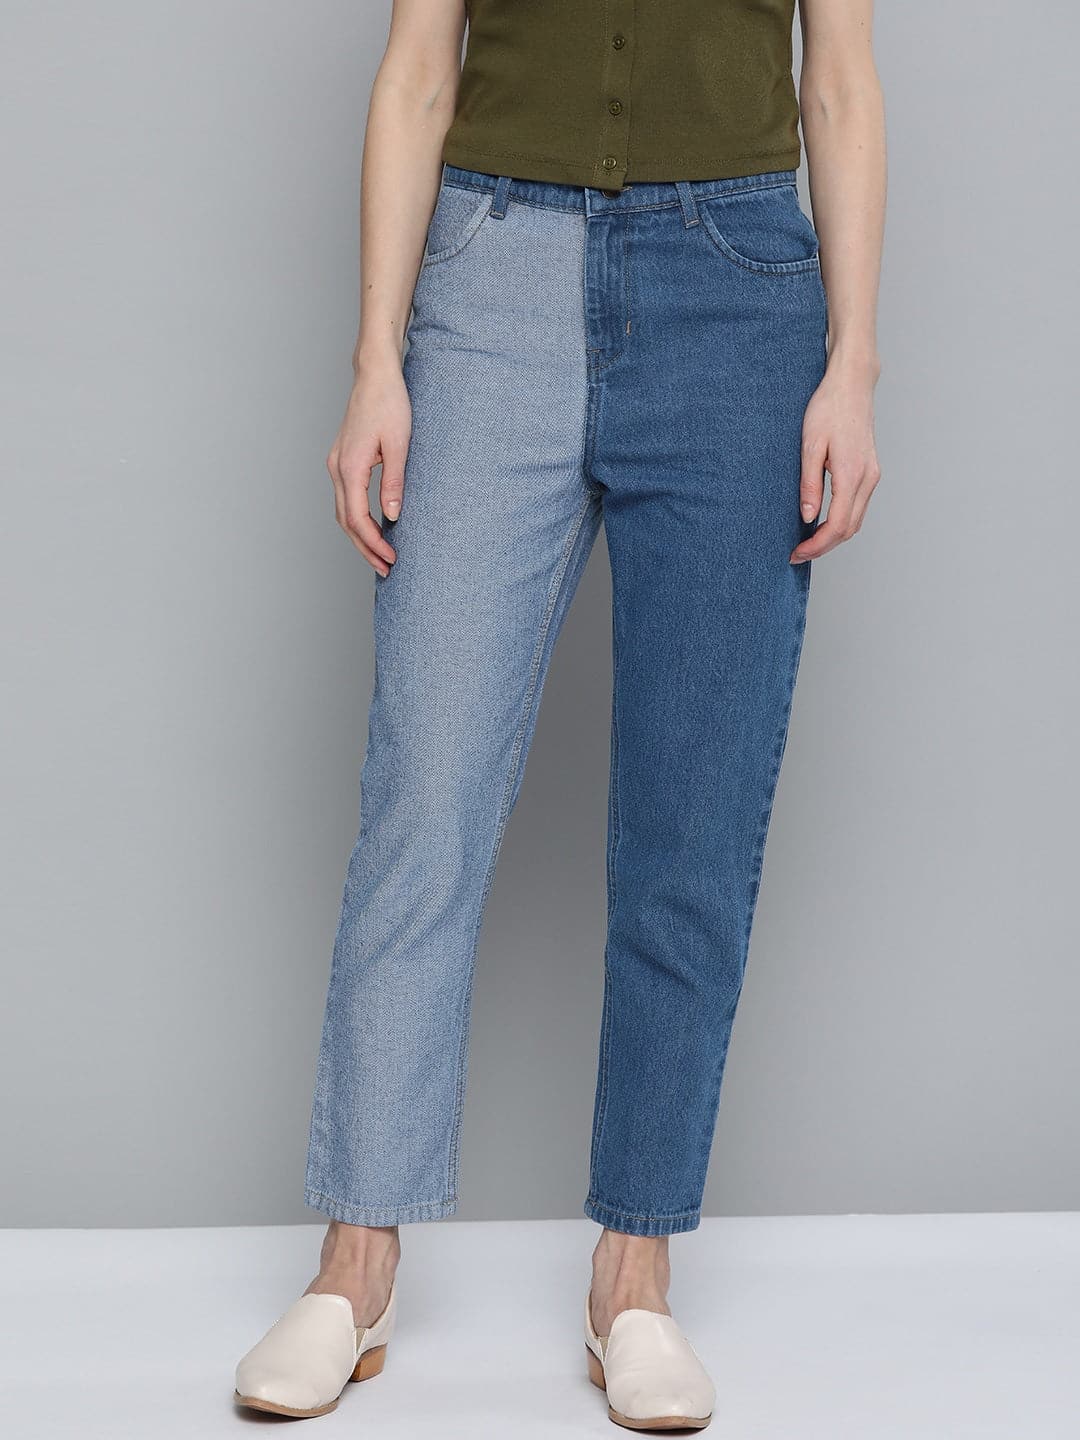 Blue & Navy Color Block Slouchy Jeans-Jeans-SASSAFRAS